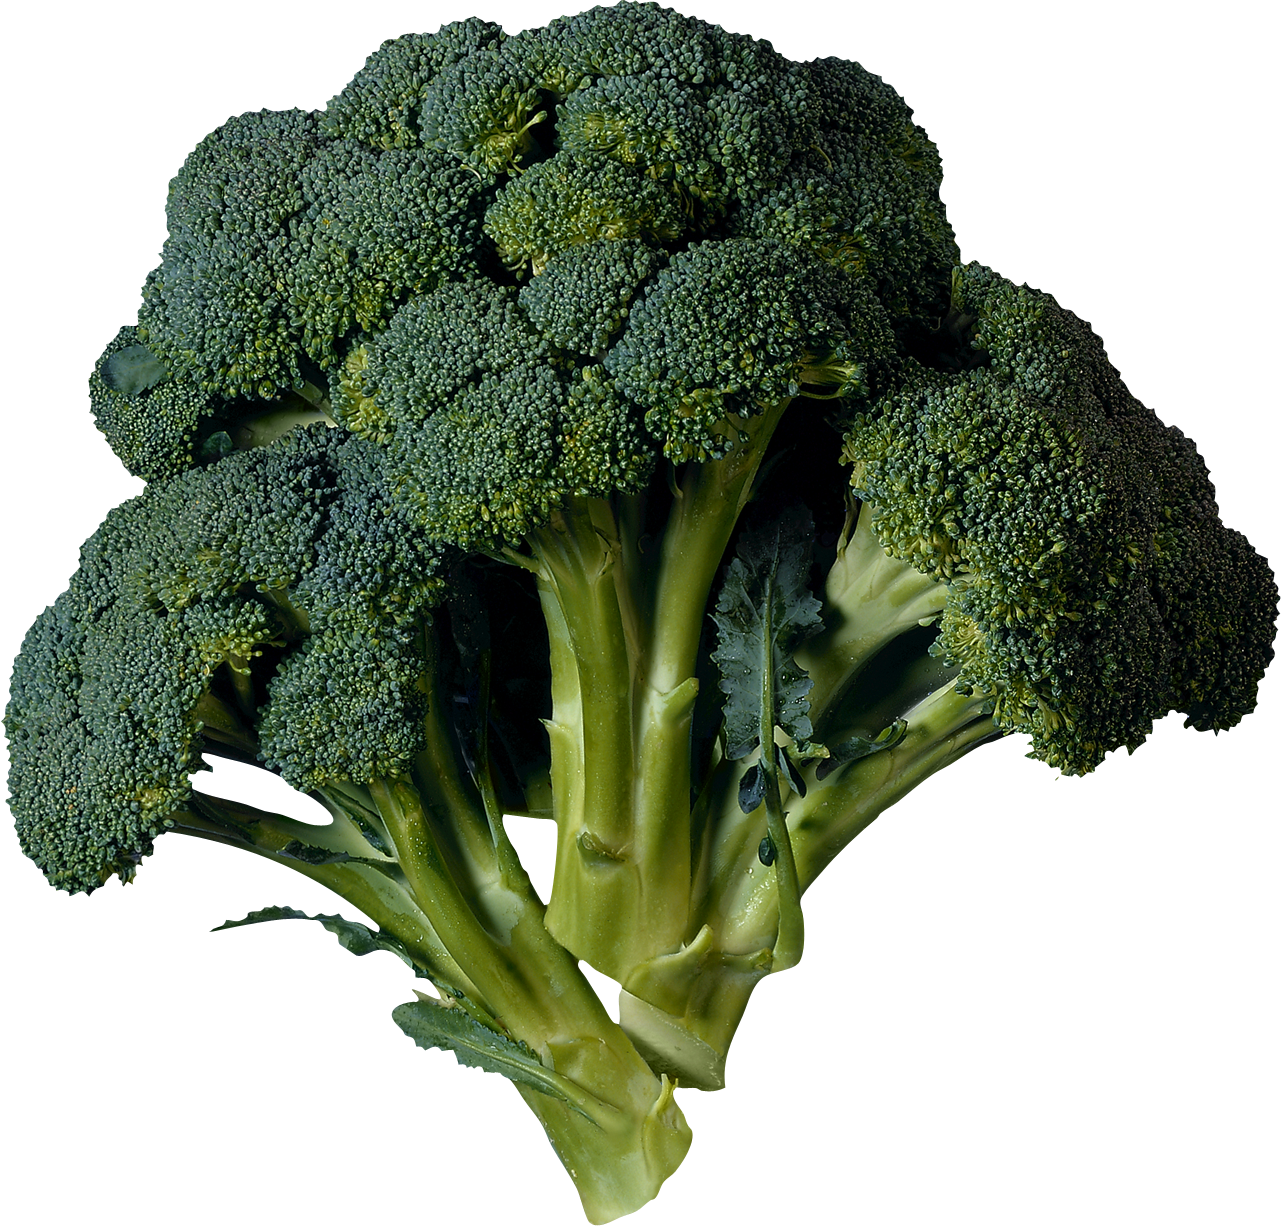 broccoli 3